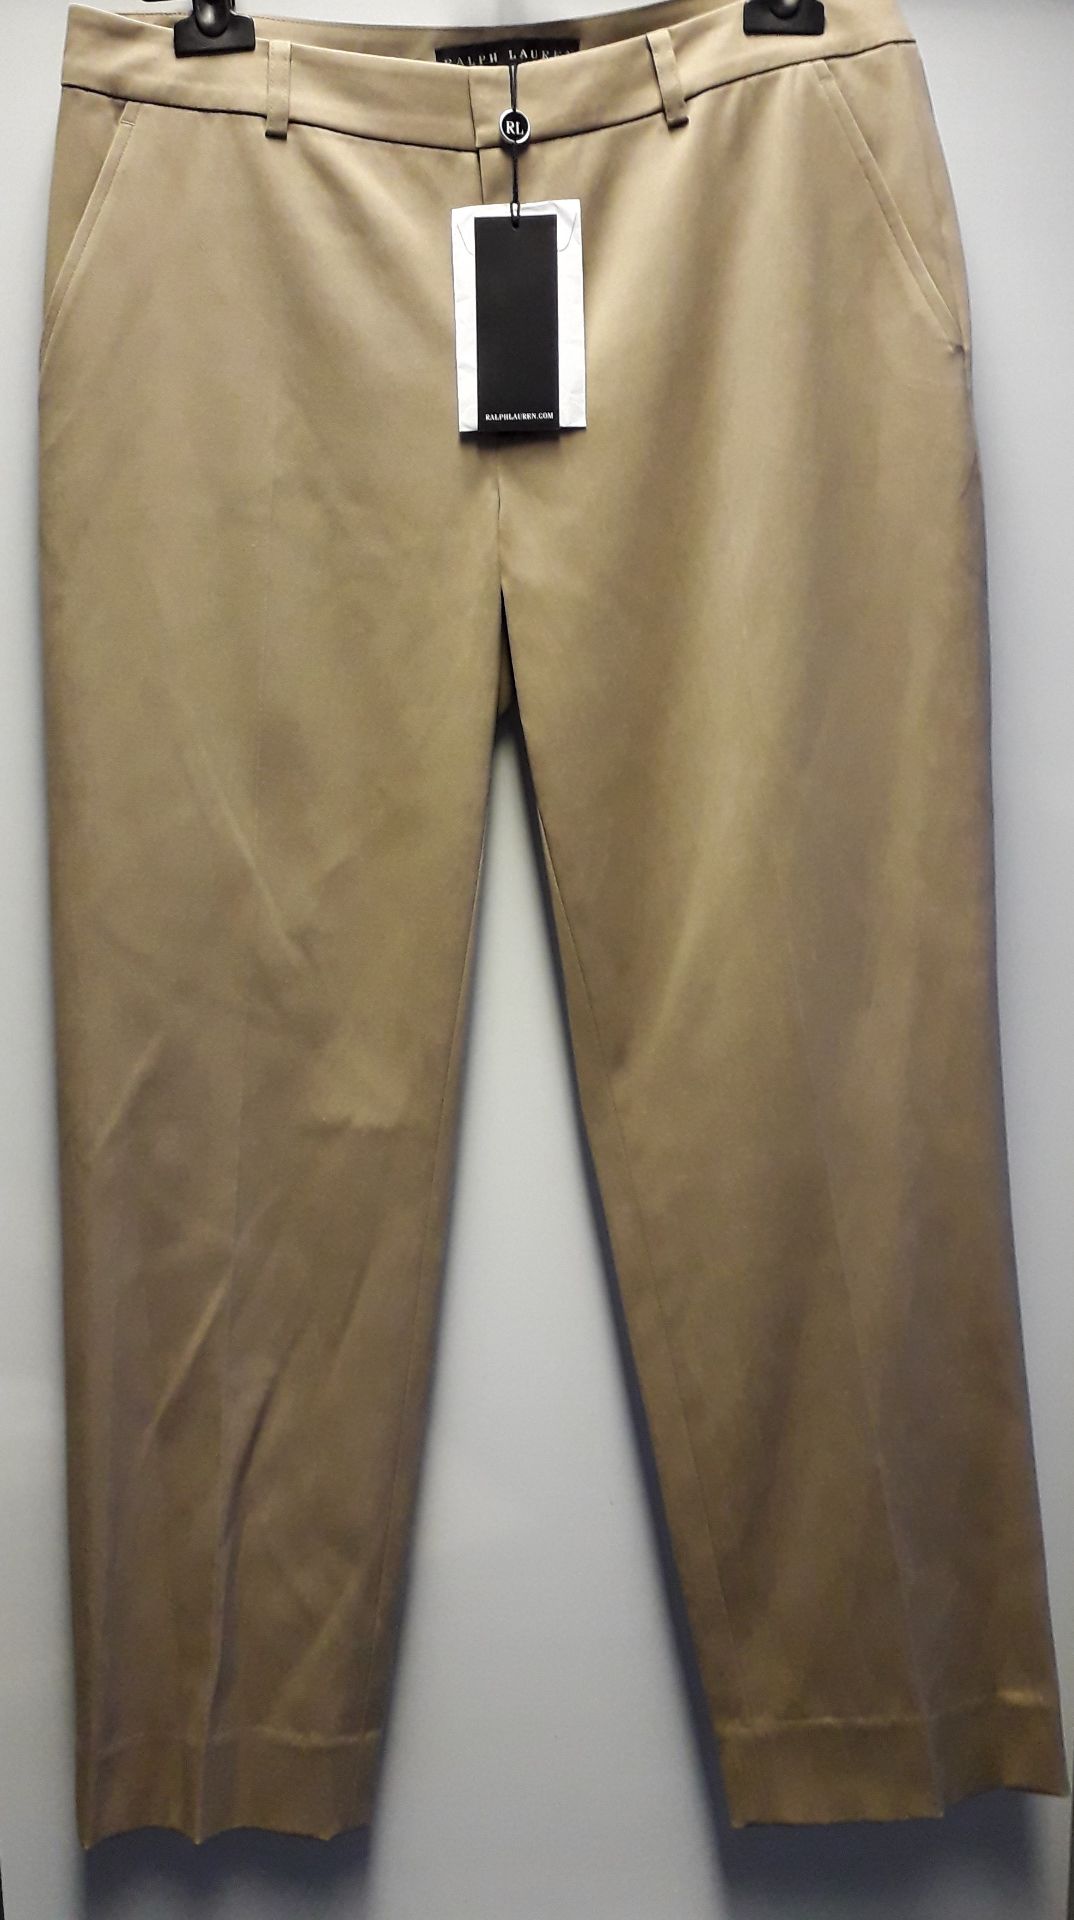 1 x Ralph Lauren Beige Heidi Trousers - Size: 14 - Material: 58% Wool, 40% Cotton, 2% Elastane -